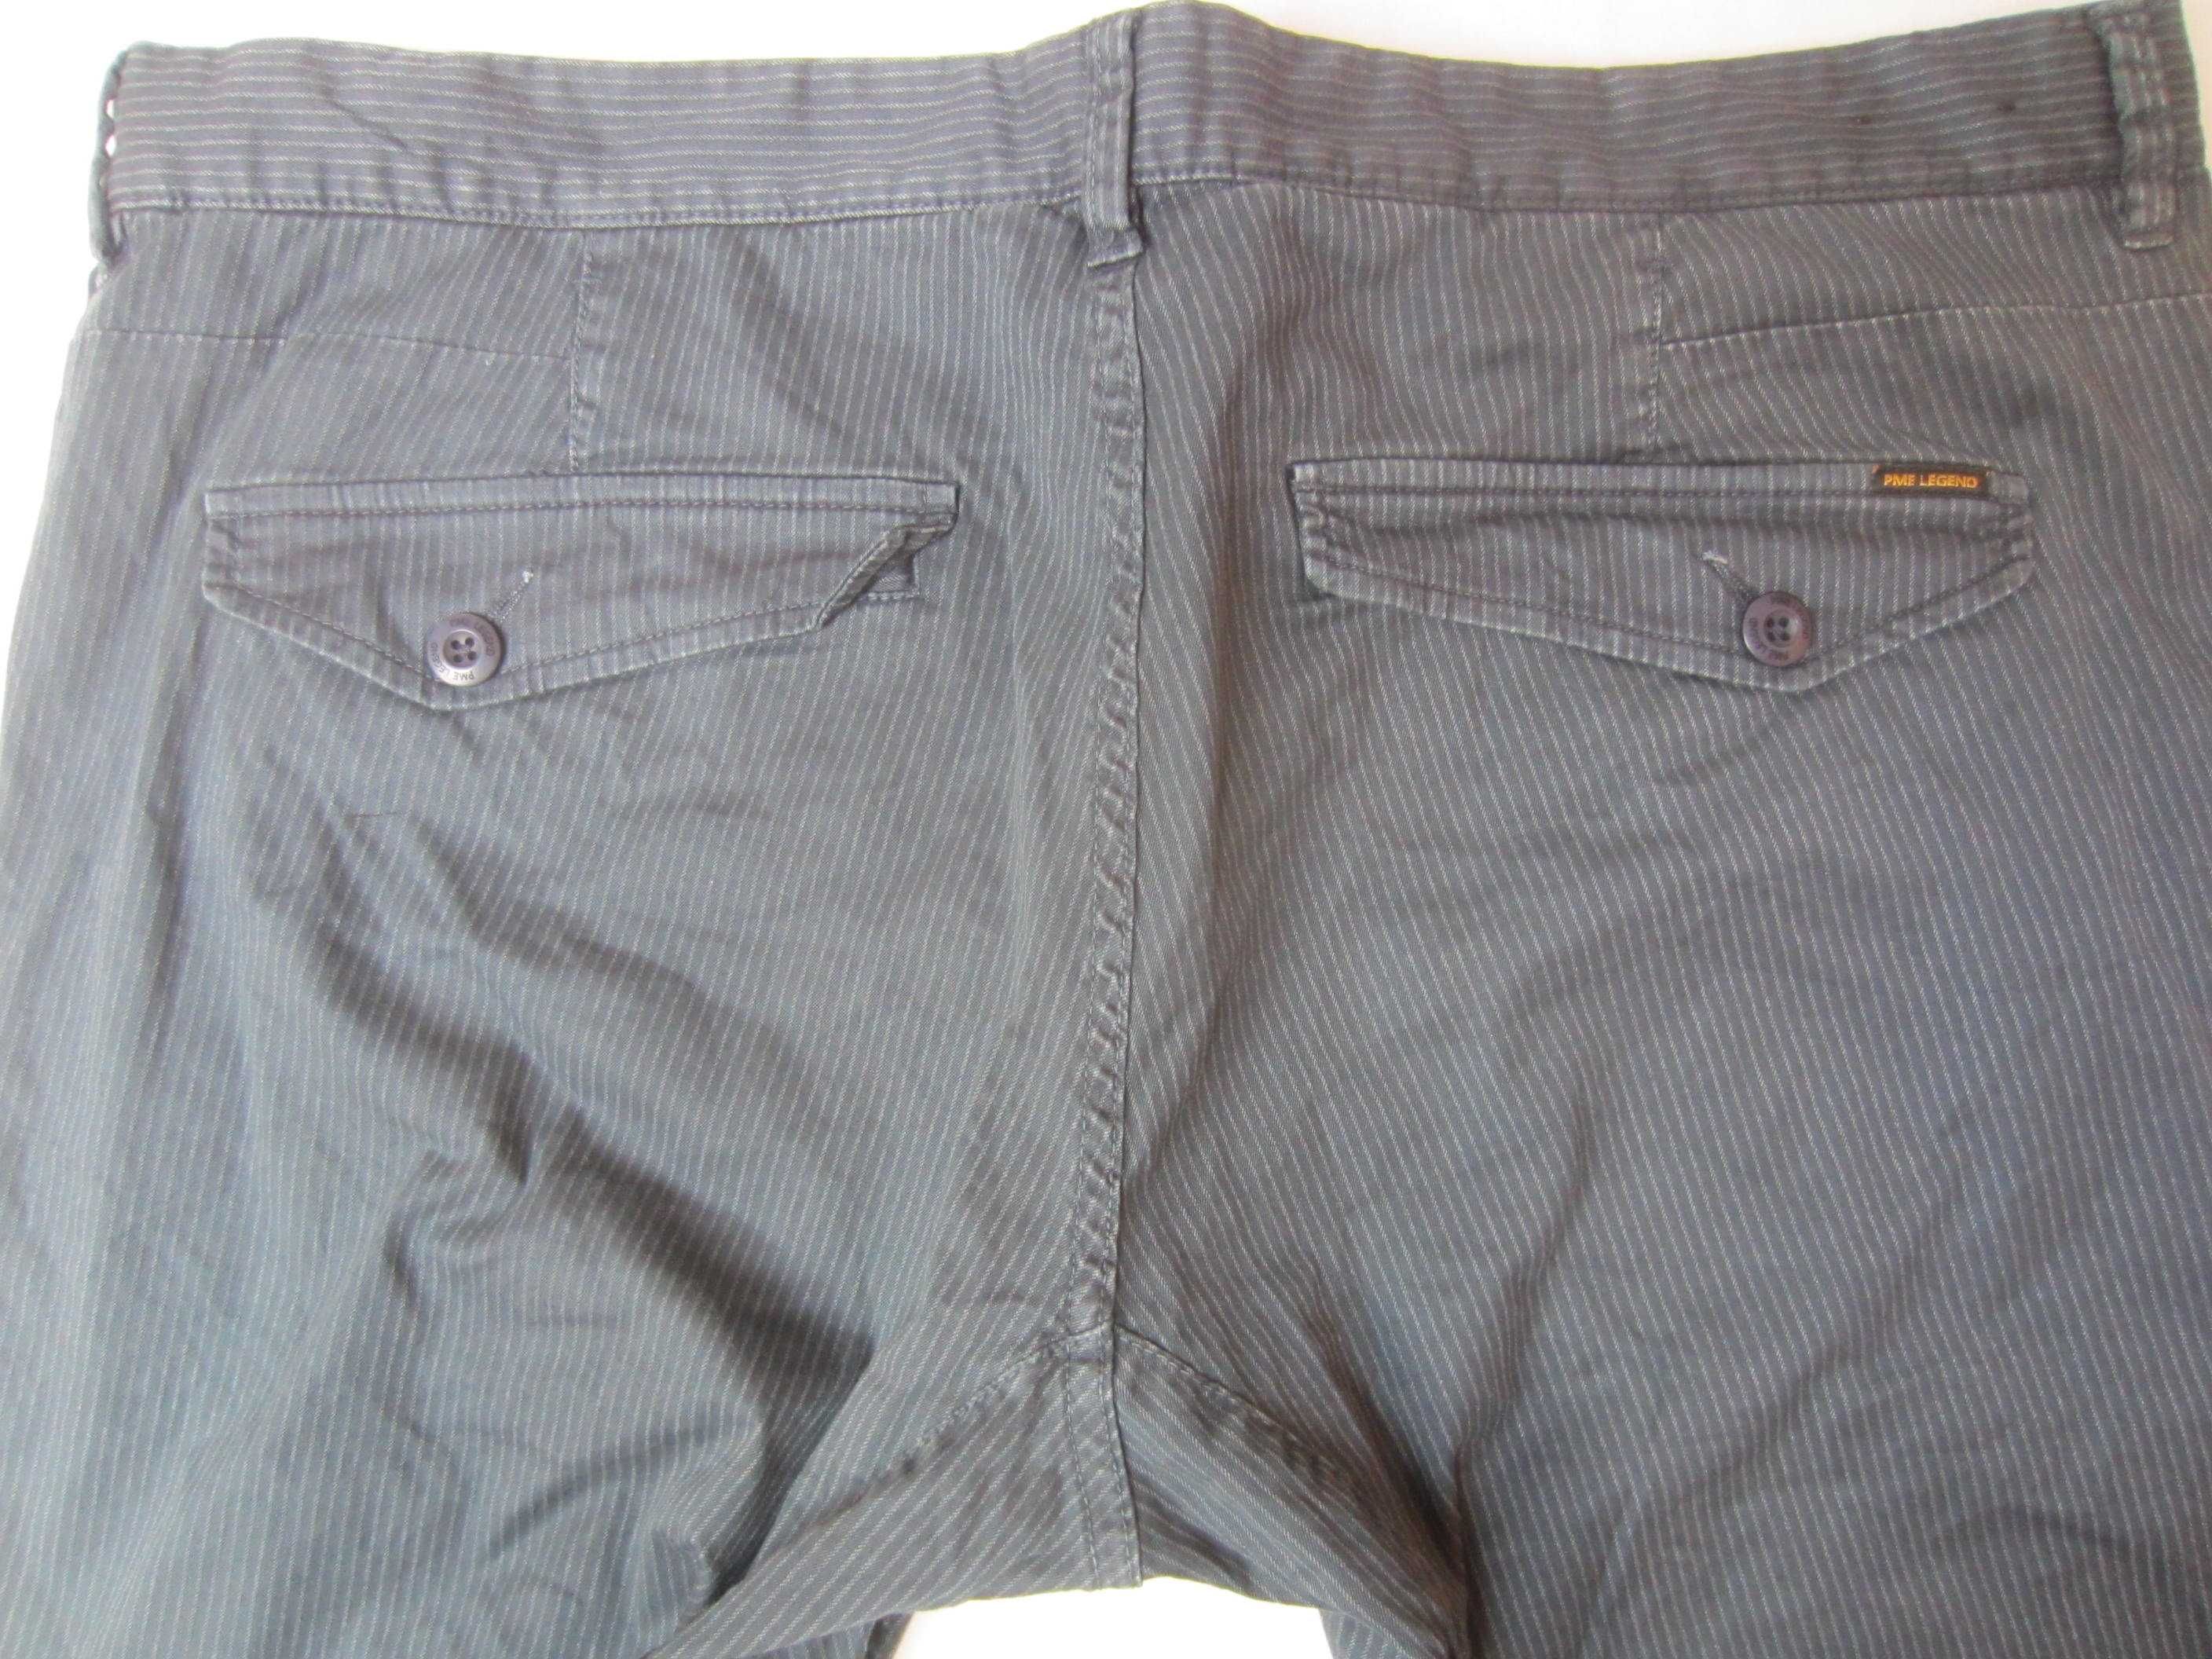 Pantalon PME Legend,W40 L34,Talie=104cm,Lung=103cm, usor skinny